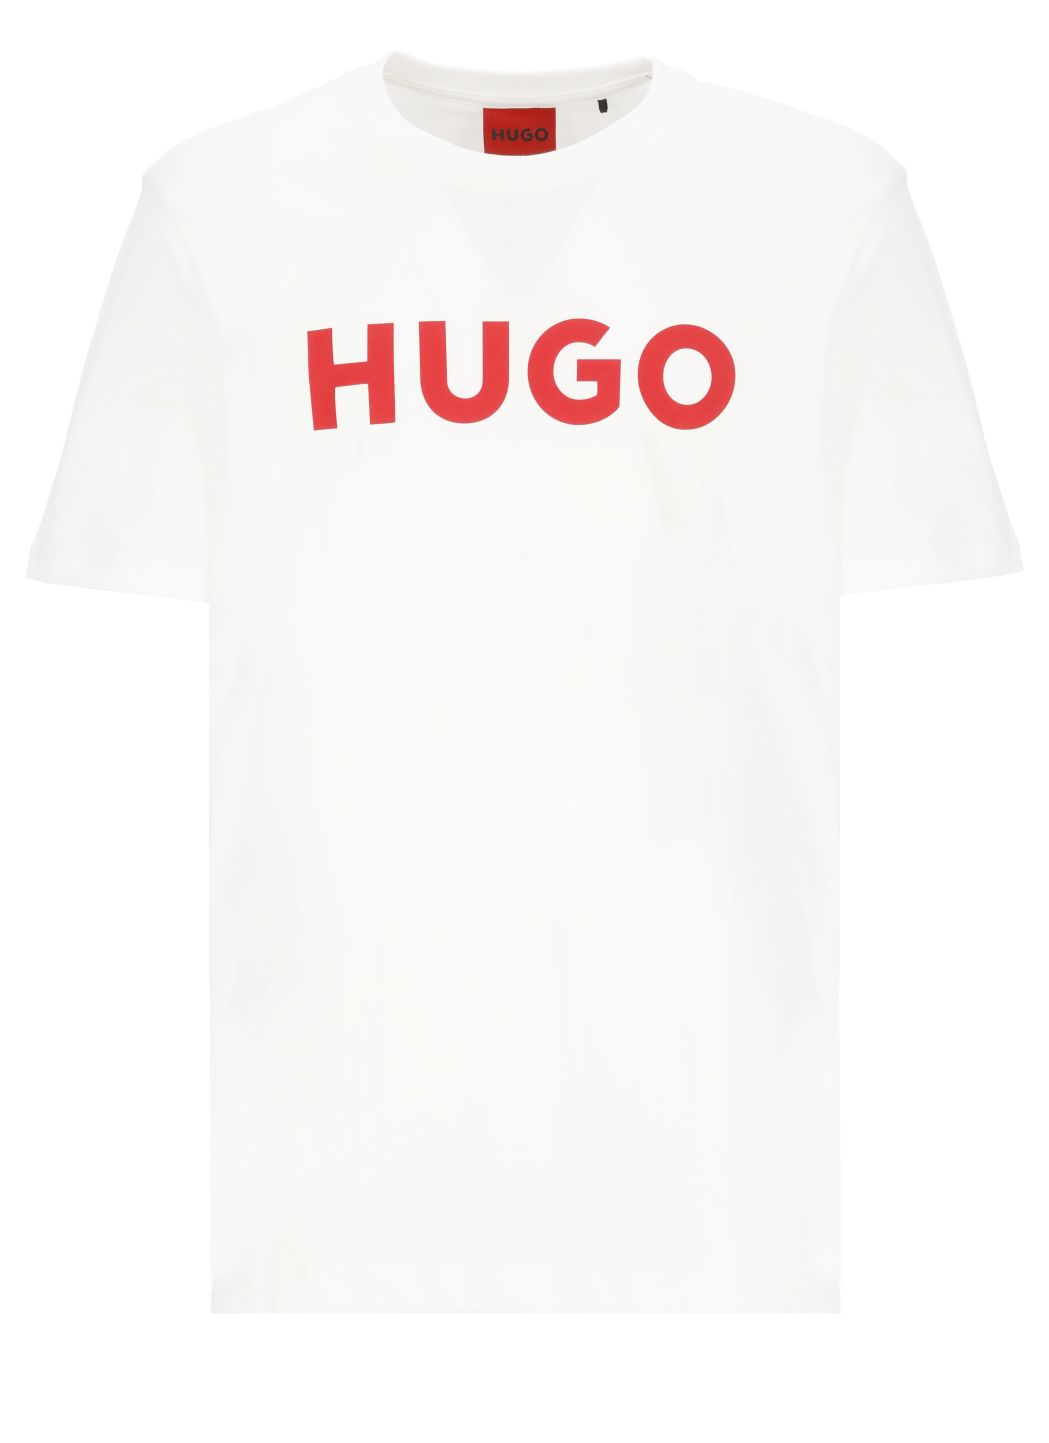 Dulivio t-shirt